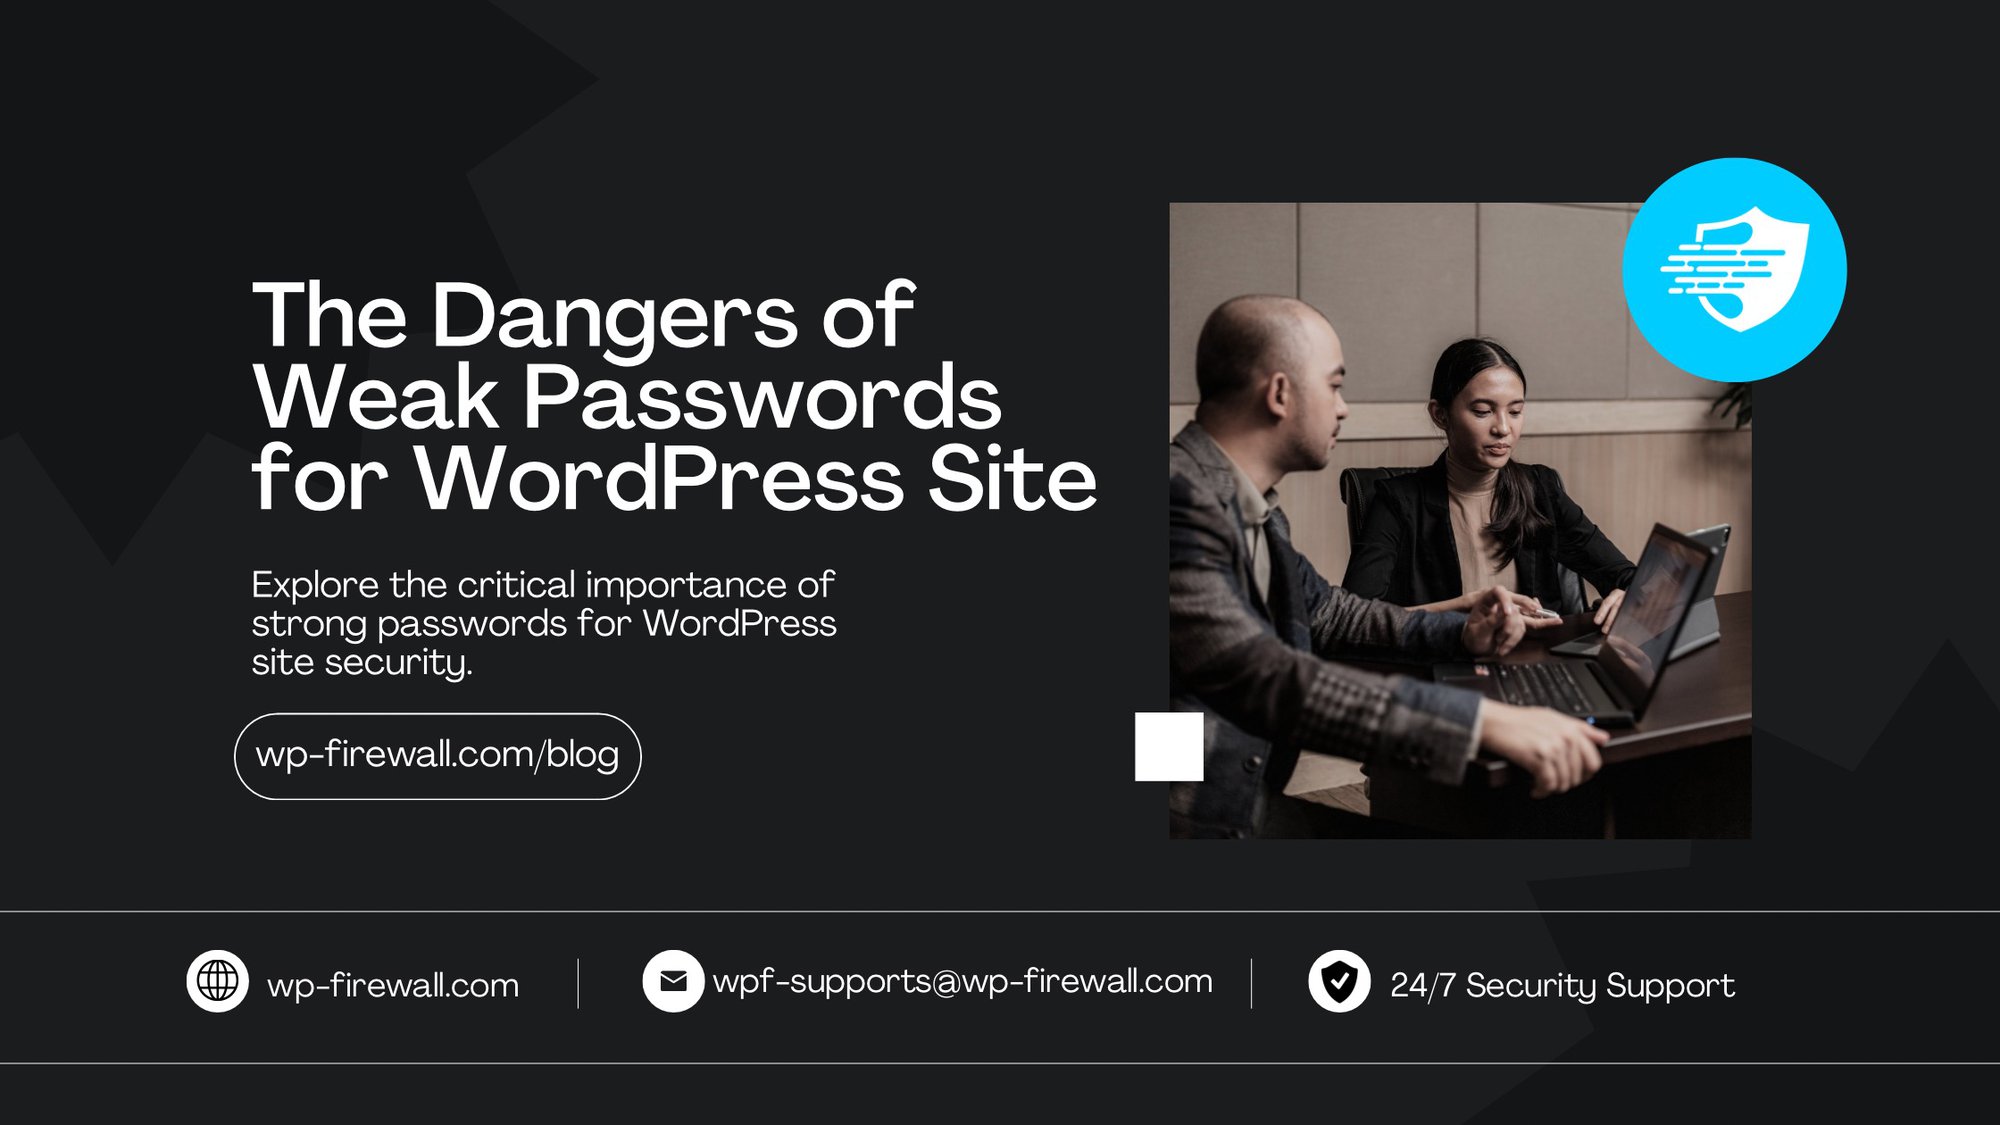 The Dangers of Weak Passwords for Your WordPress Site cover